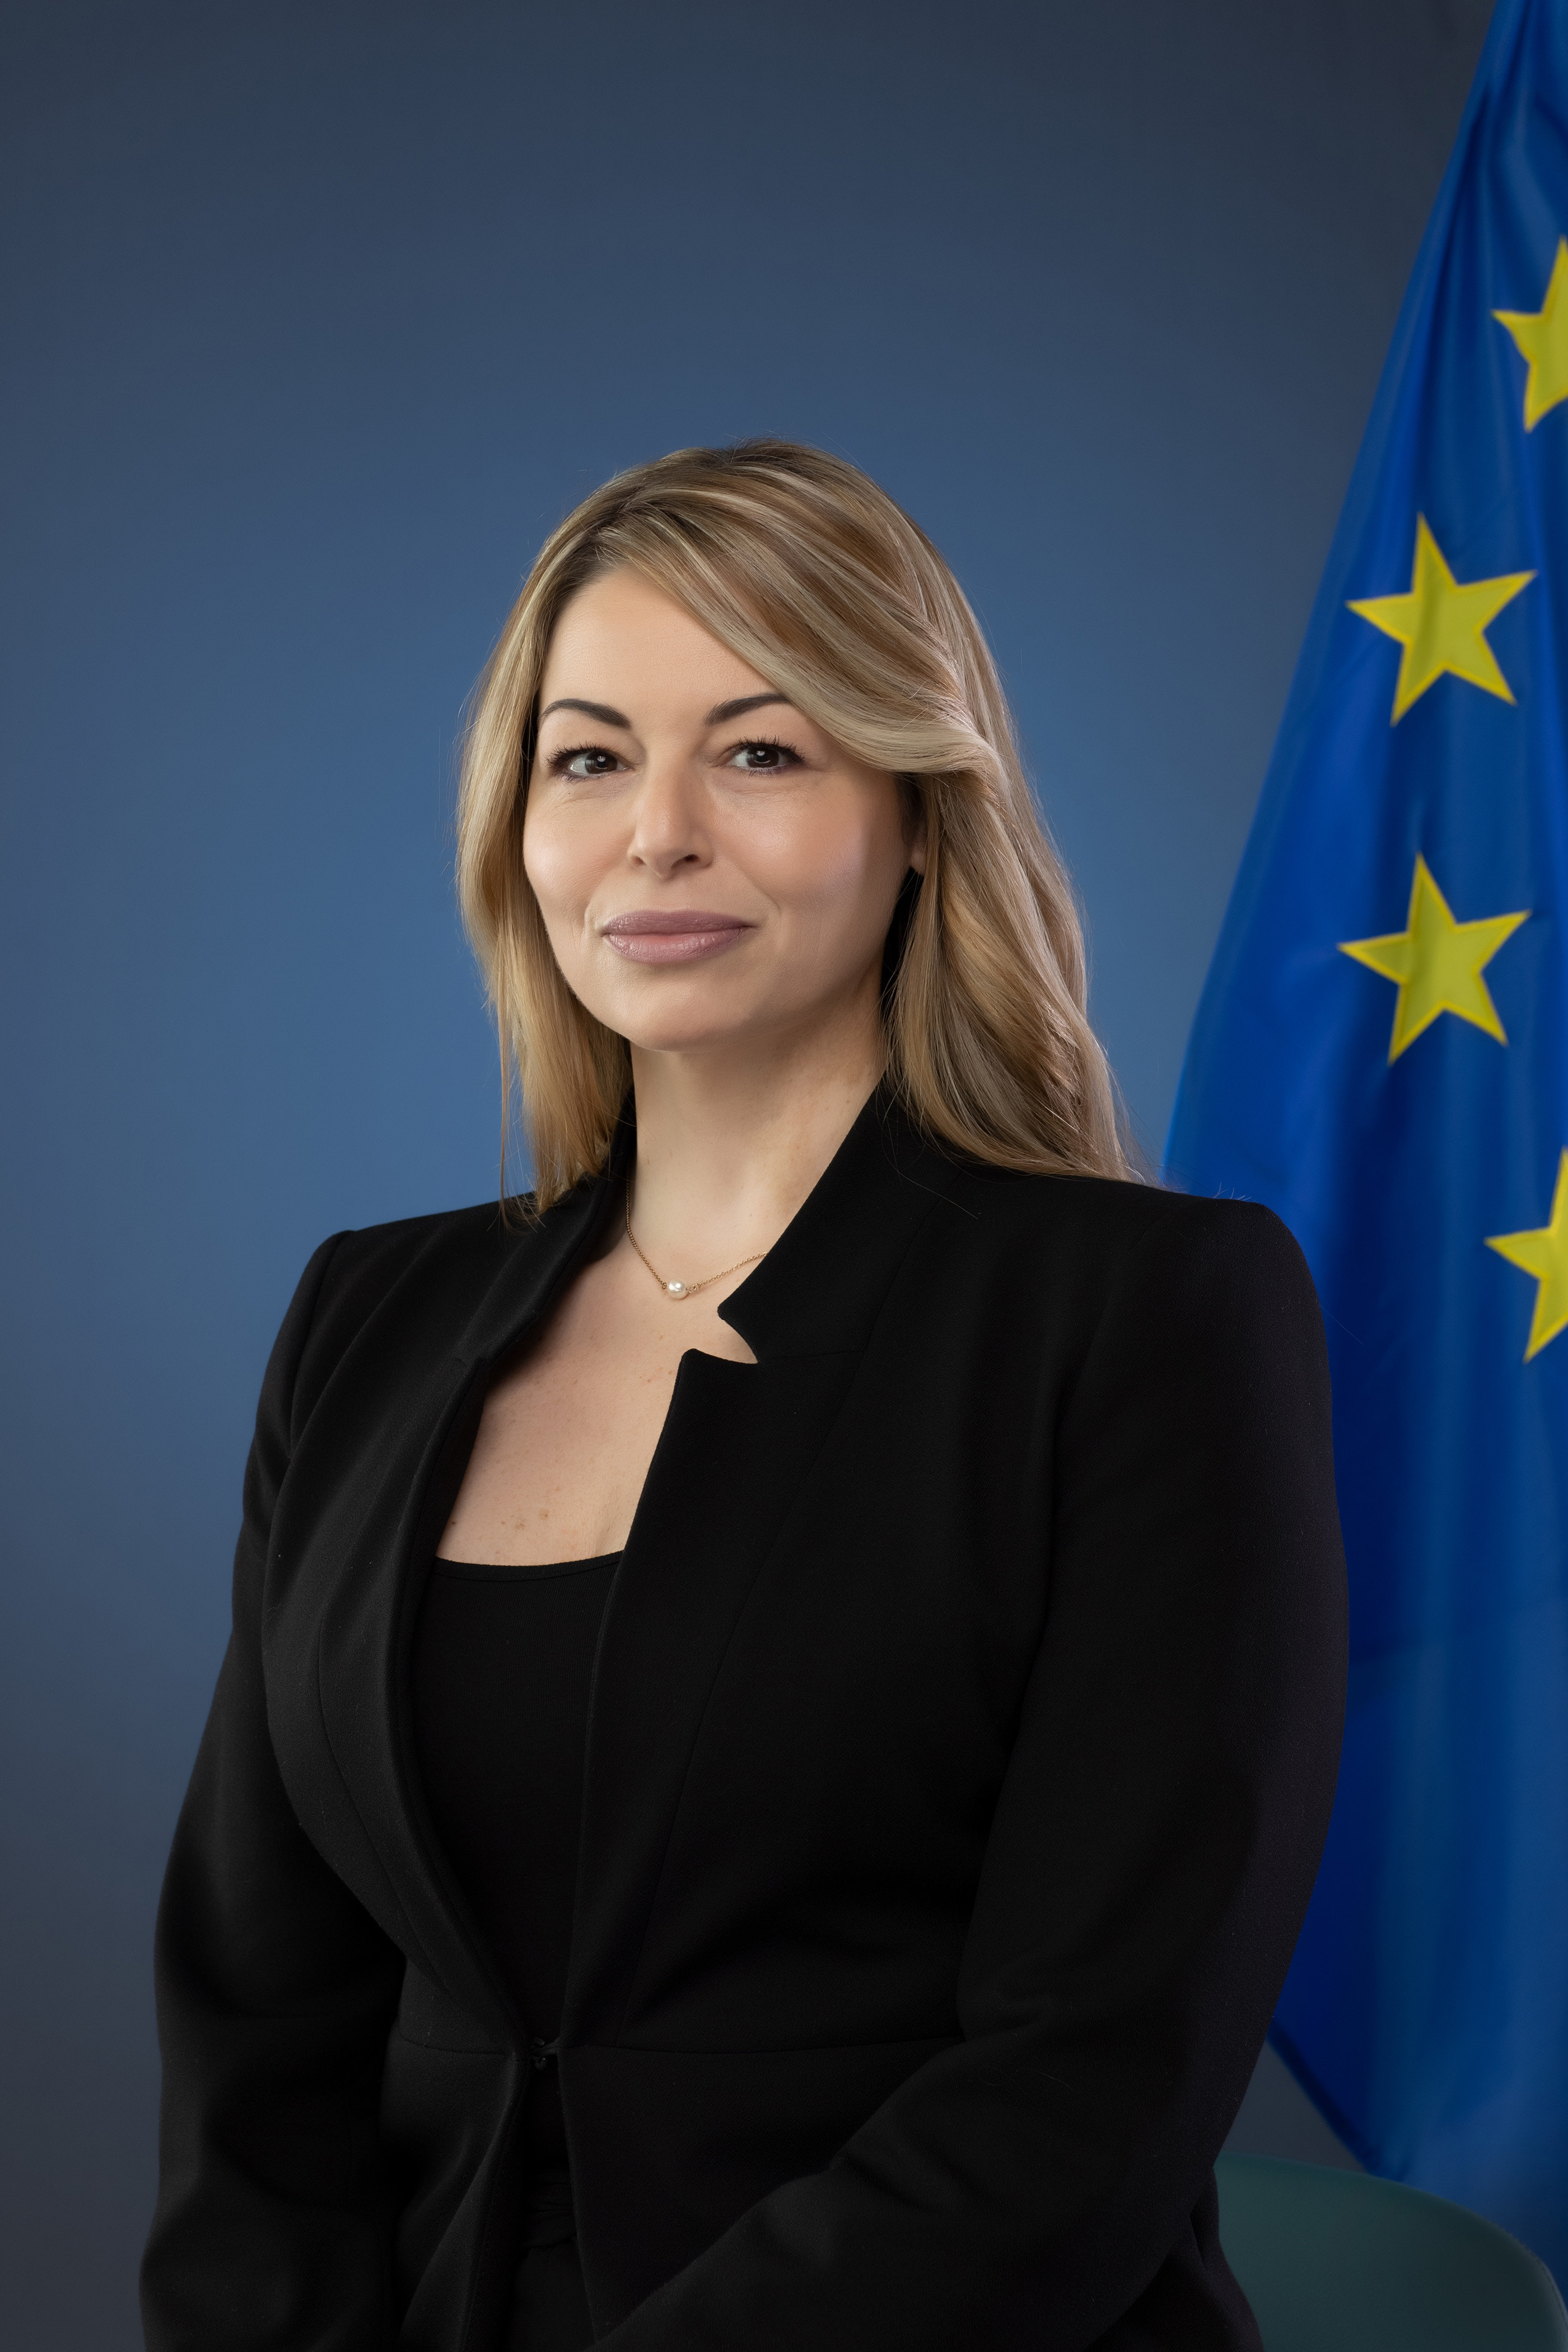 Photograph of European Prosecutor for Malta Yvonne Farrugia